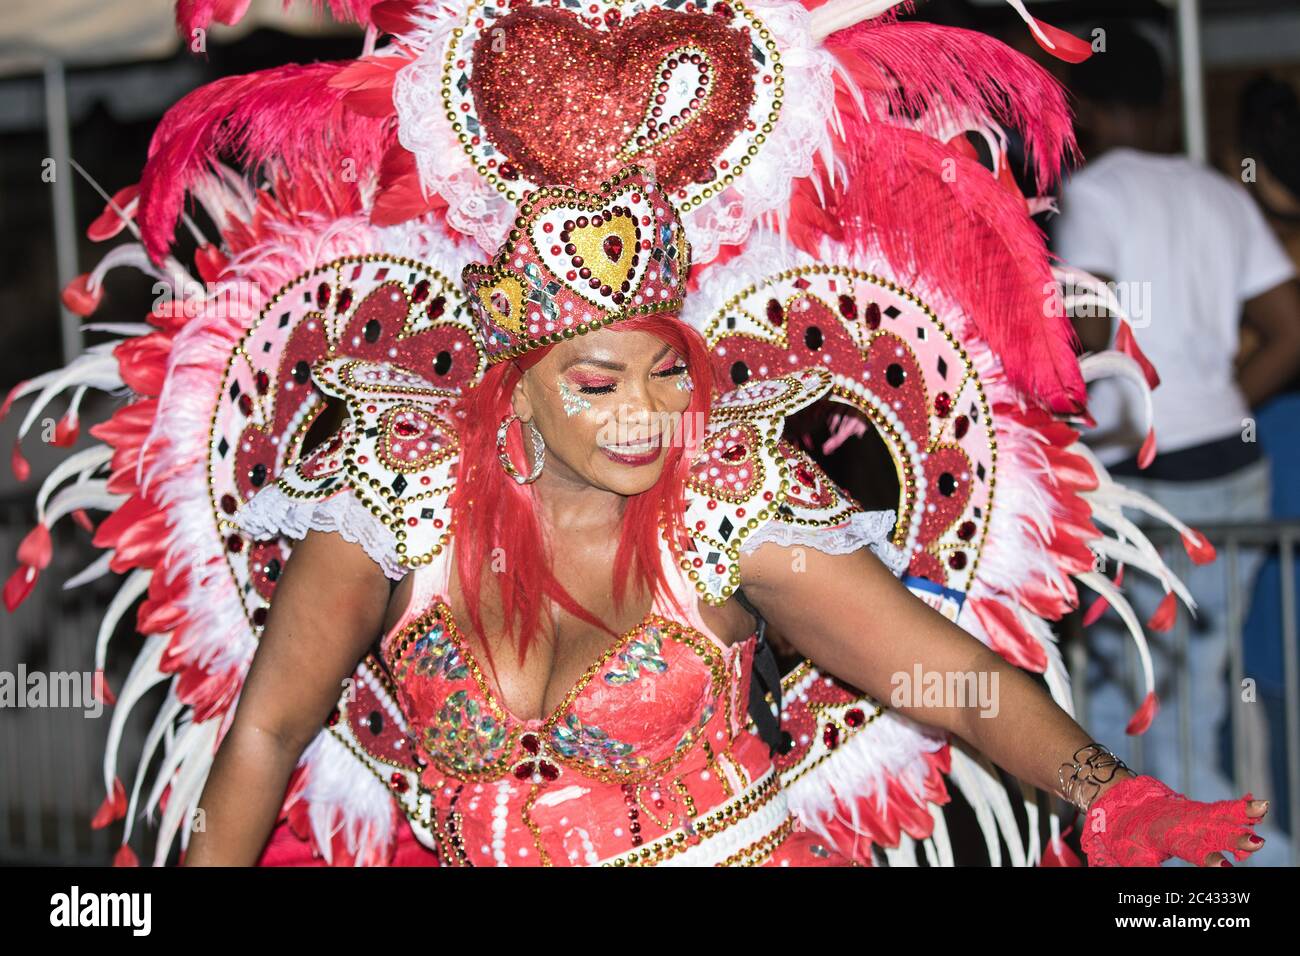 Christmas Junkanoo parade celebration in the Bahamas with colorful